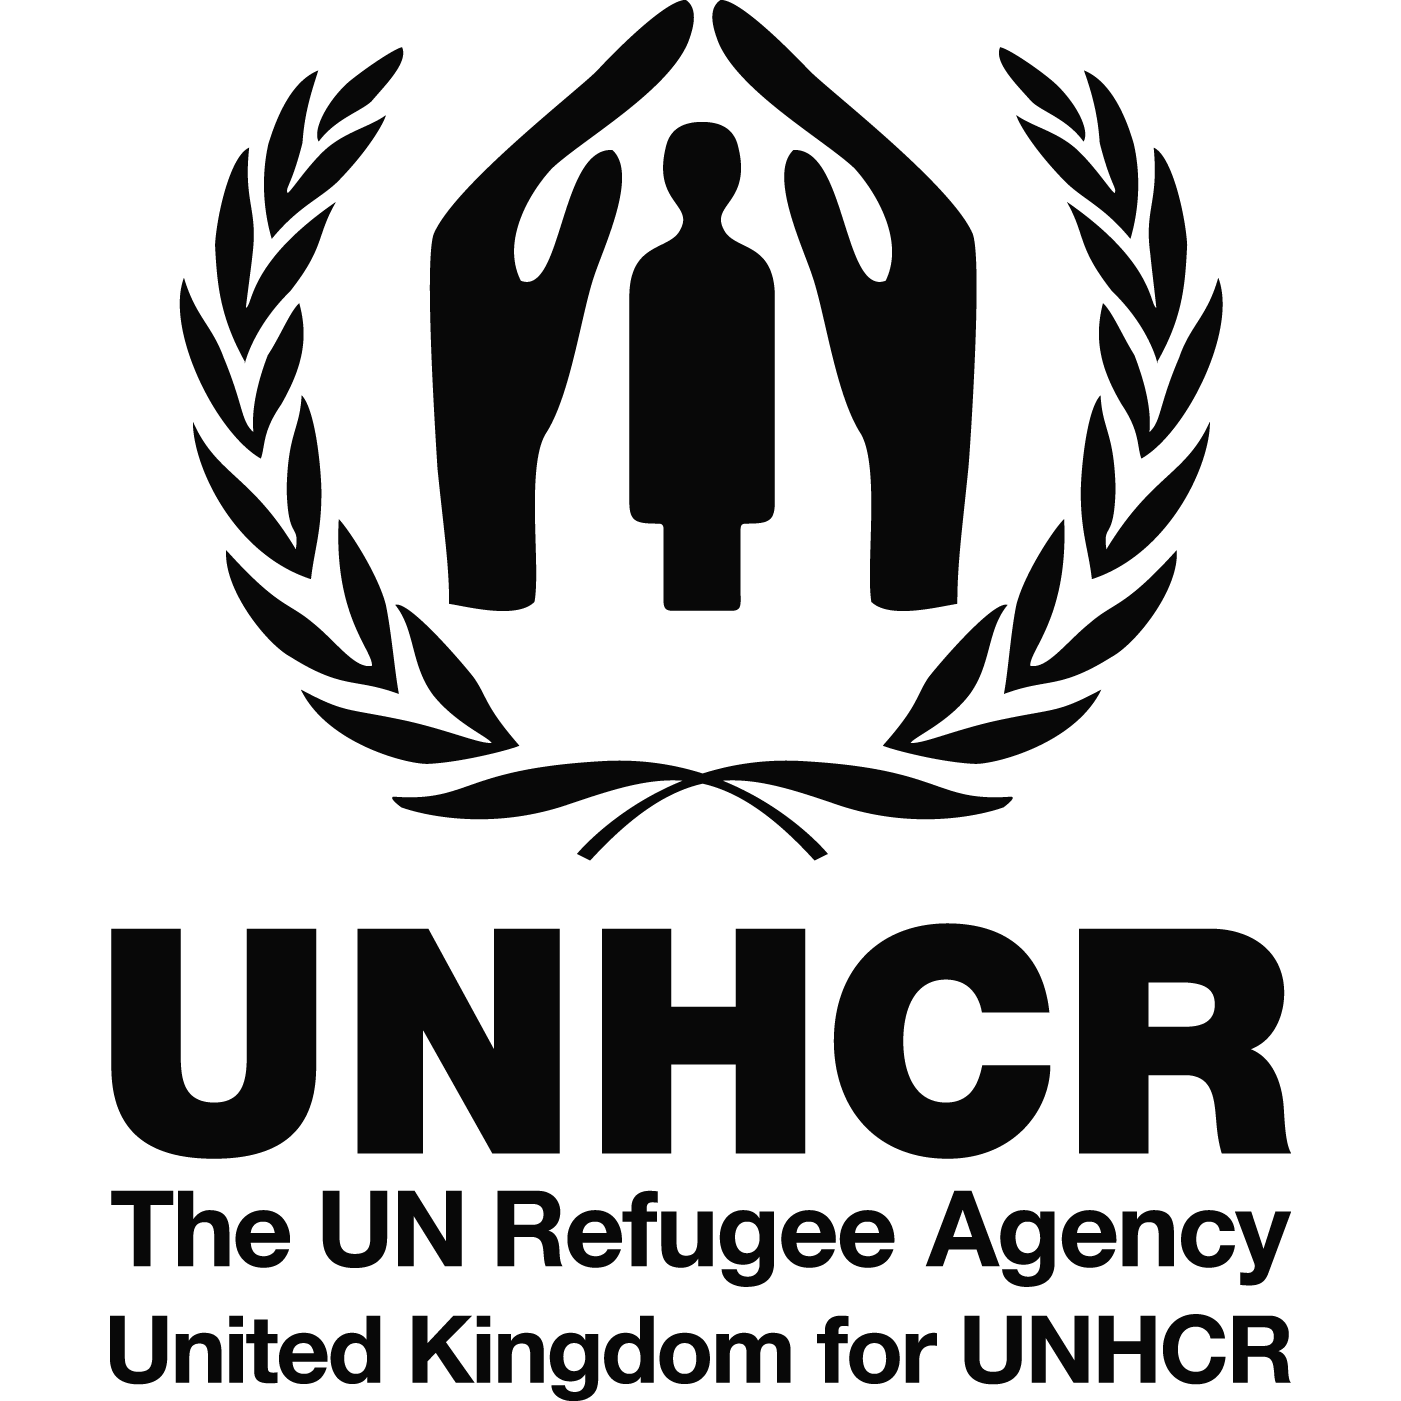 UK-for-UNHCR-vertical-Black.png